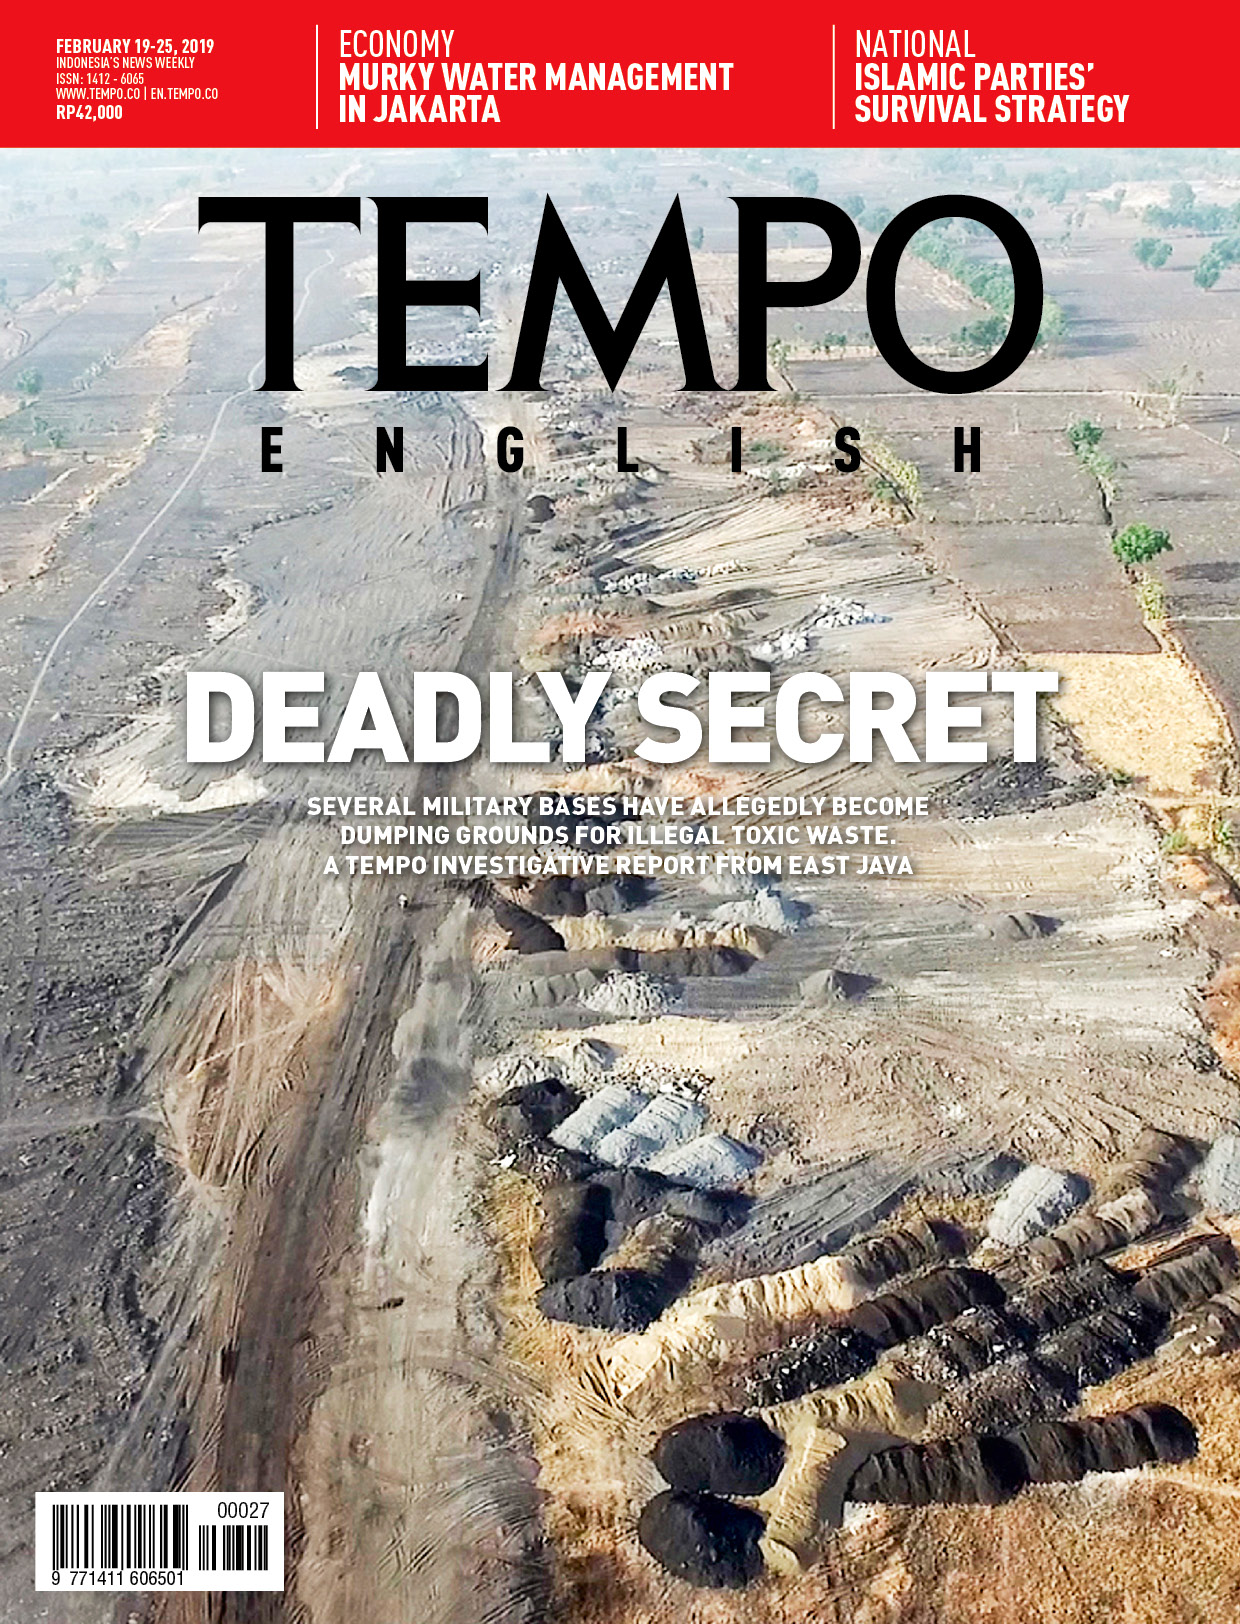 Cover Magz Tempo - Edisi 19-02-2019 - Deadly Secret